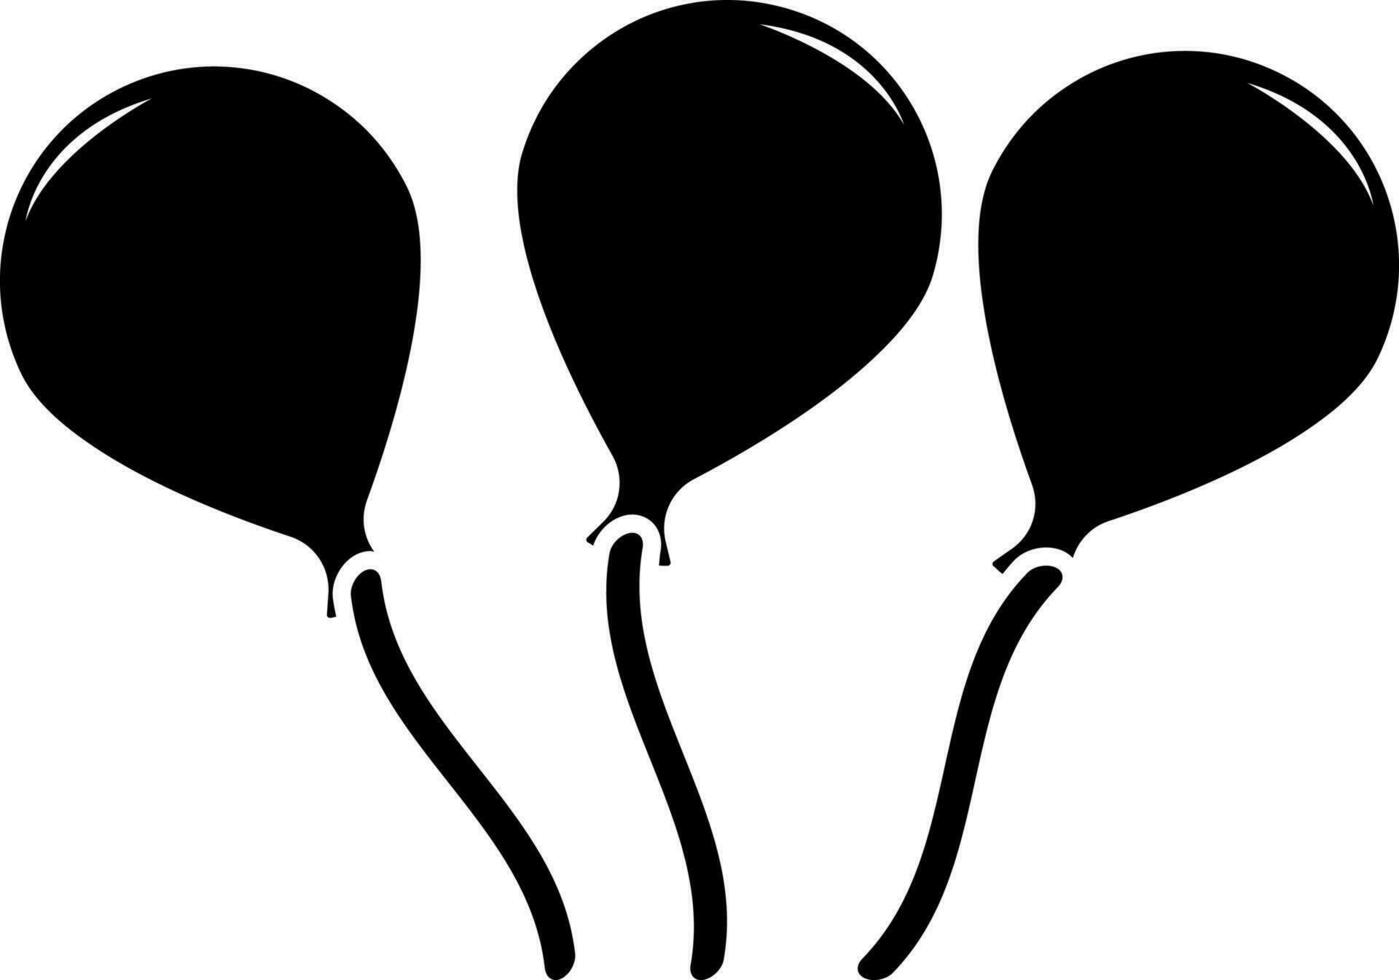 Black balloons on white background. vector